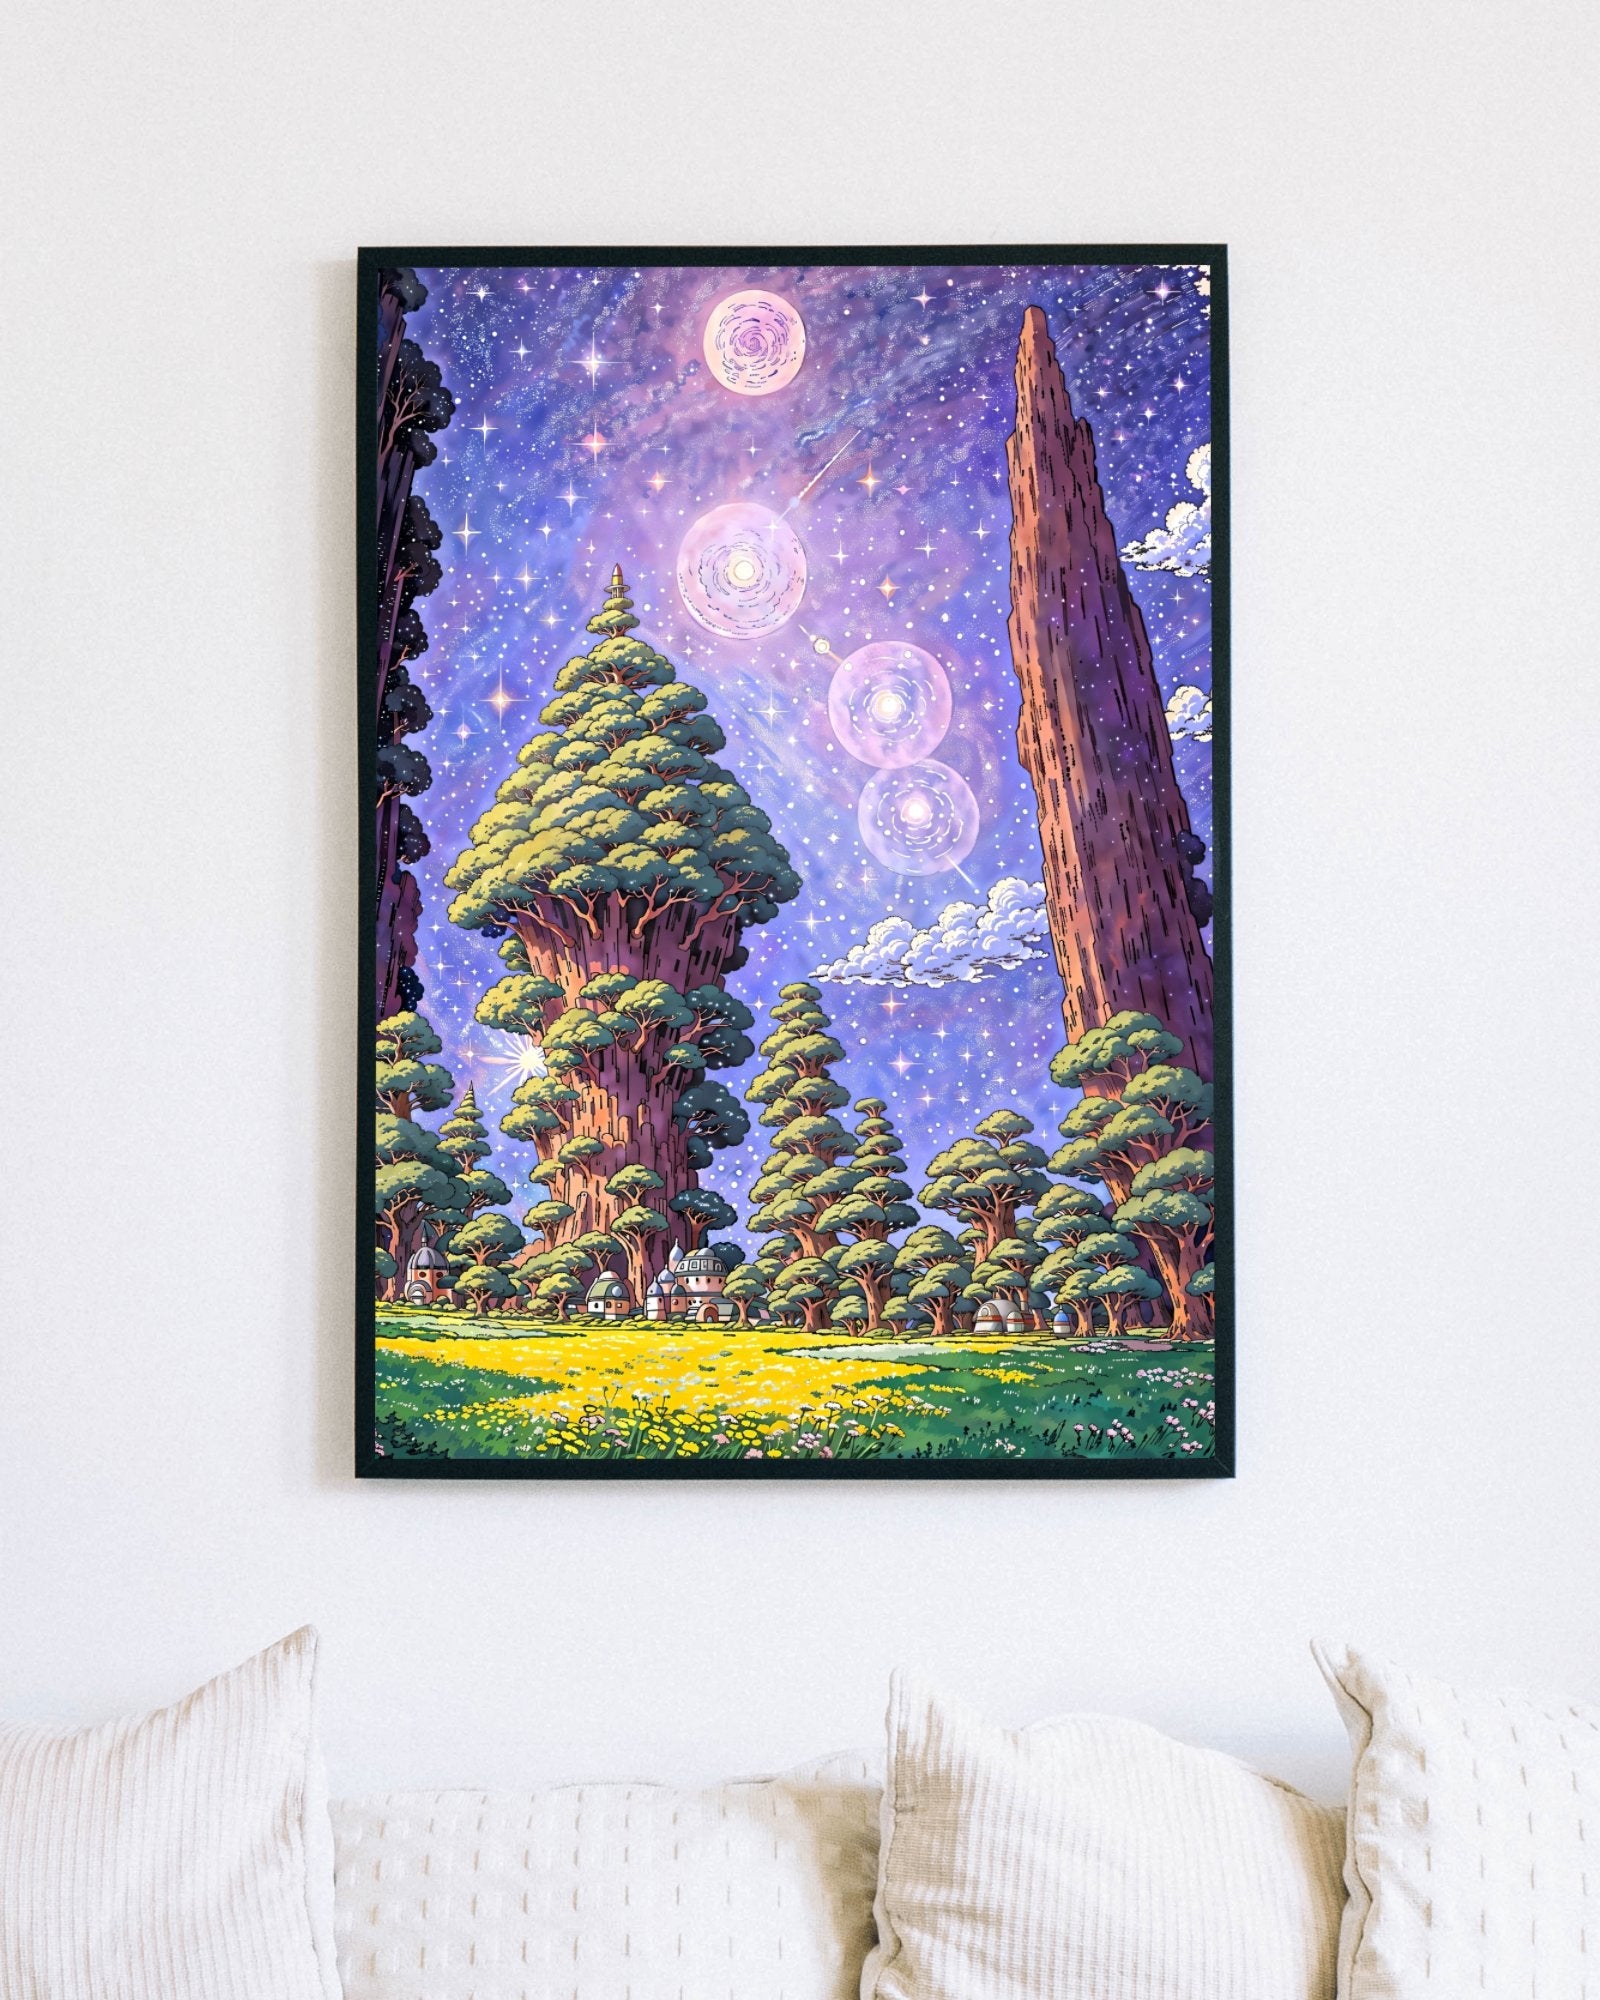 Interstellar gnome village - Poster - Ever colorful